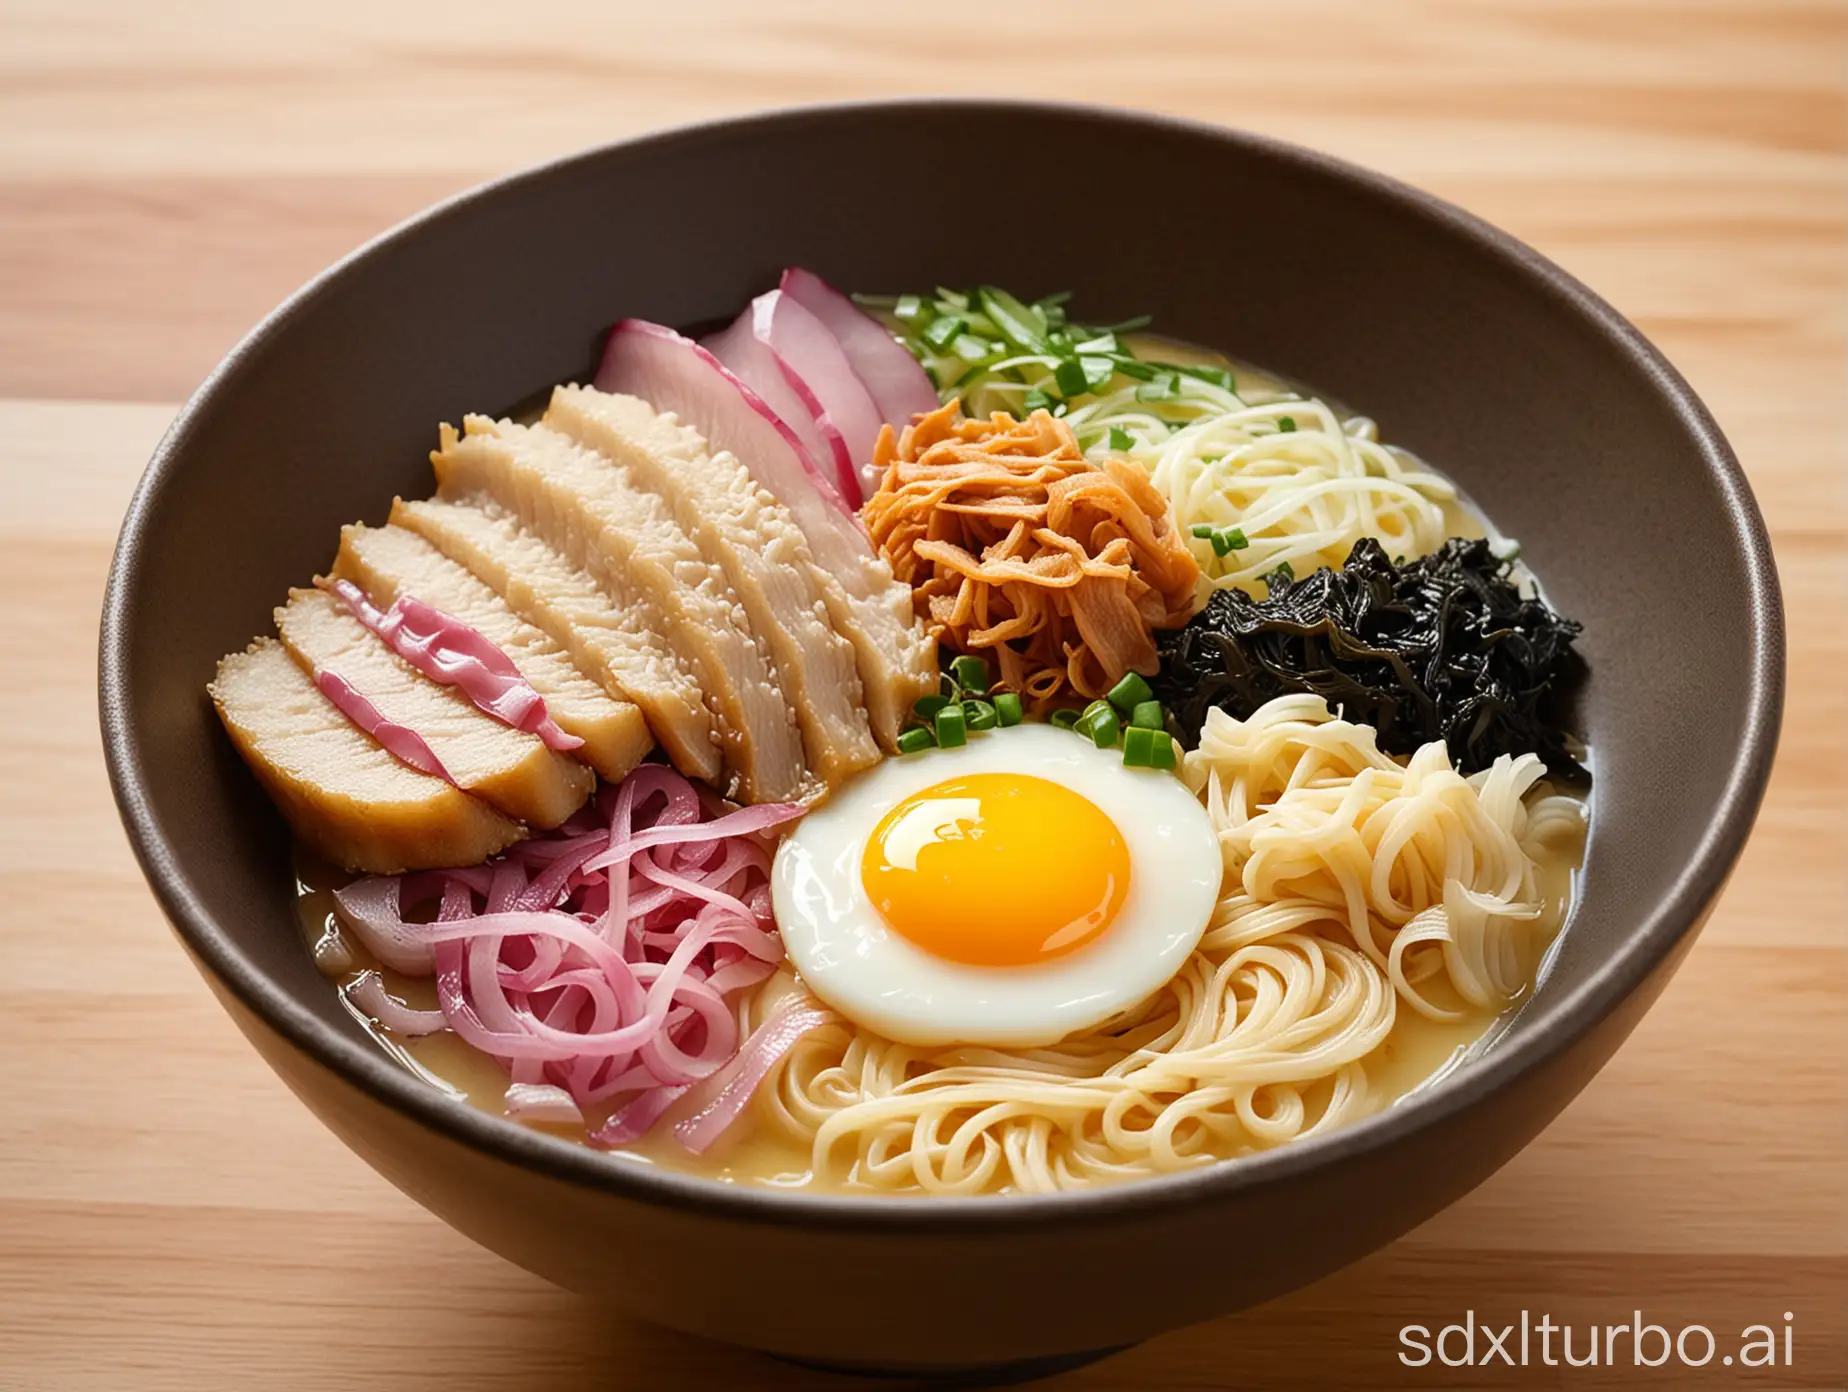 Delicious-Tonkotsu-Ramen-Bowl-with-Charred-Chashu-Pork-and-Ajitama-Egg